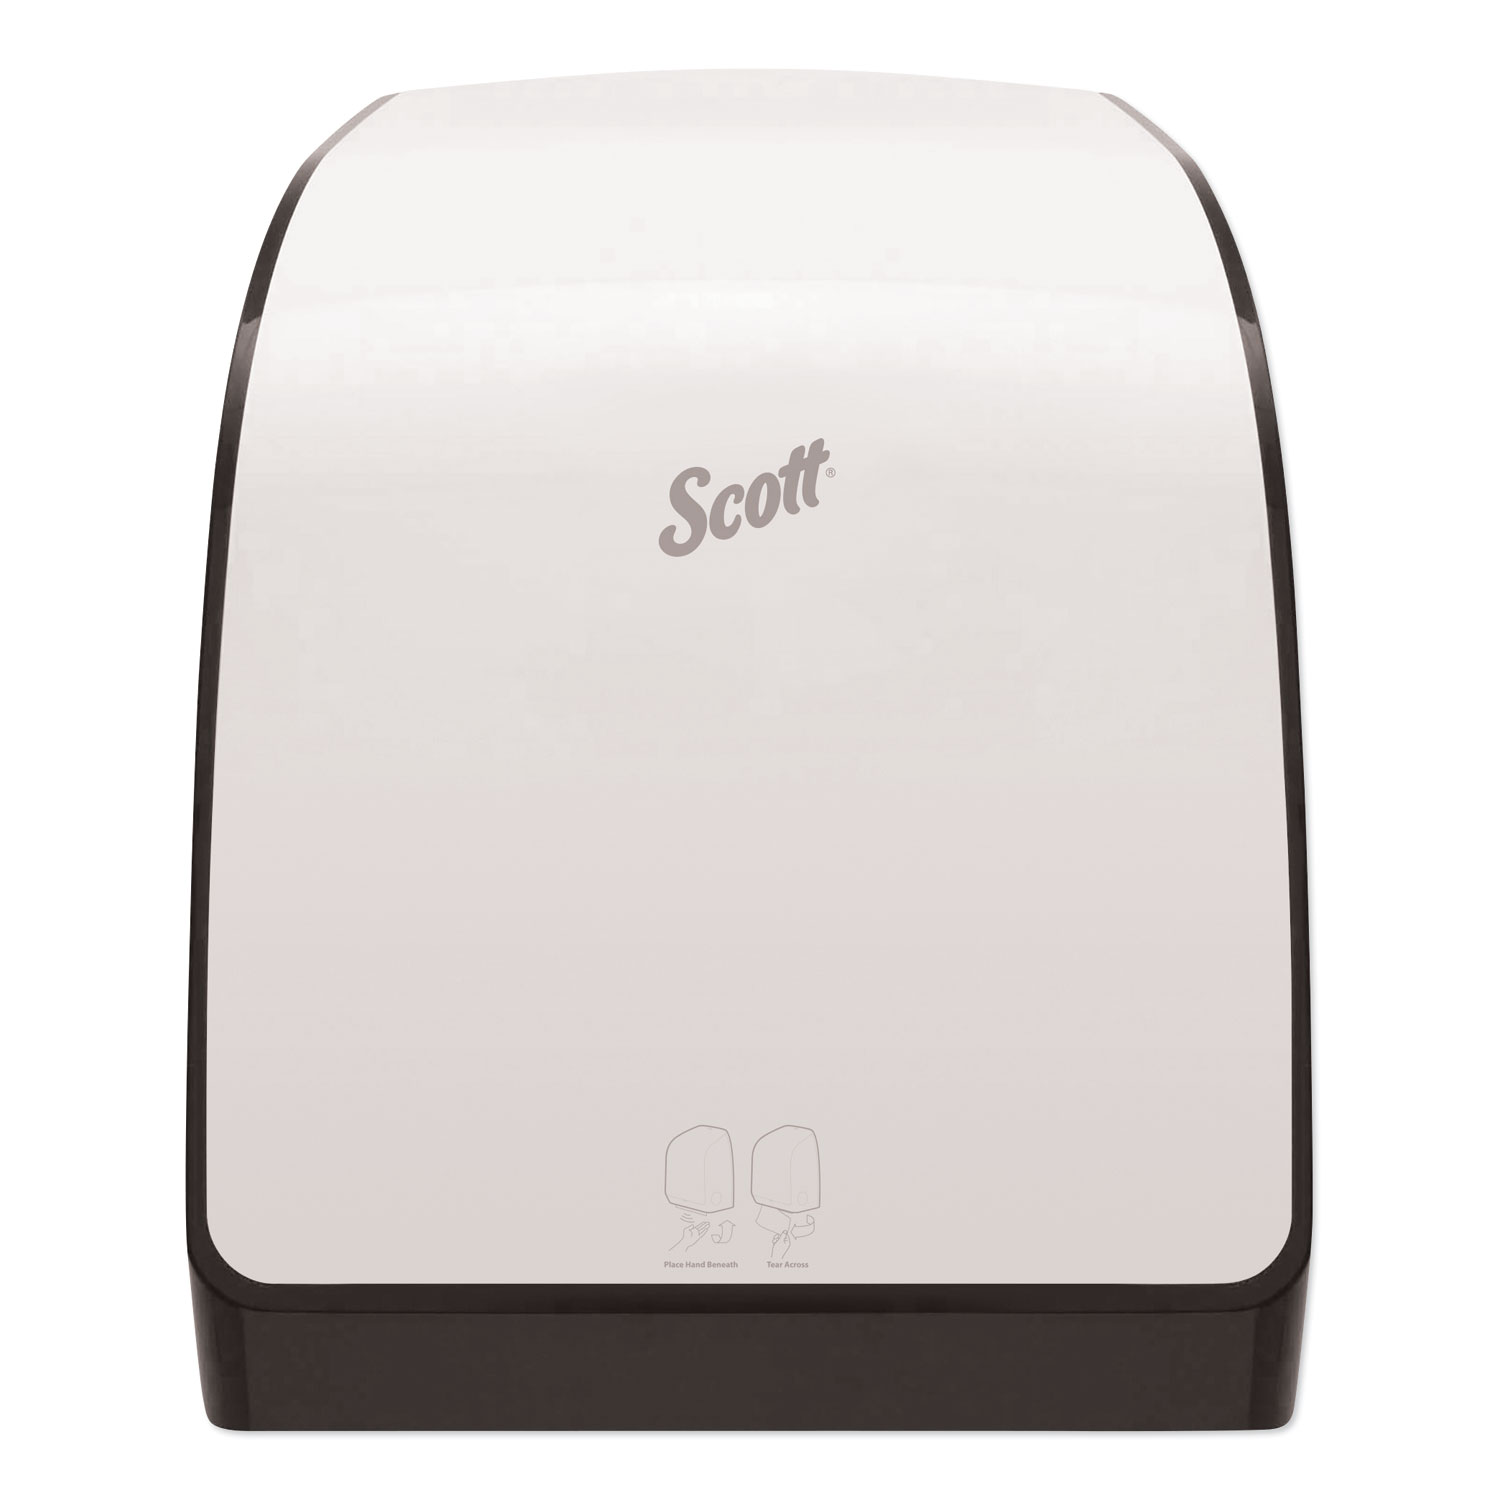  Scott KCC 34349 Pro Electronic Hard Roll Towel Dispenser, 12.66 x 9.18 x 16.44, White (KCC34349) 